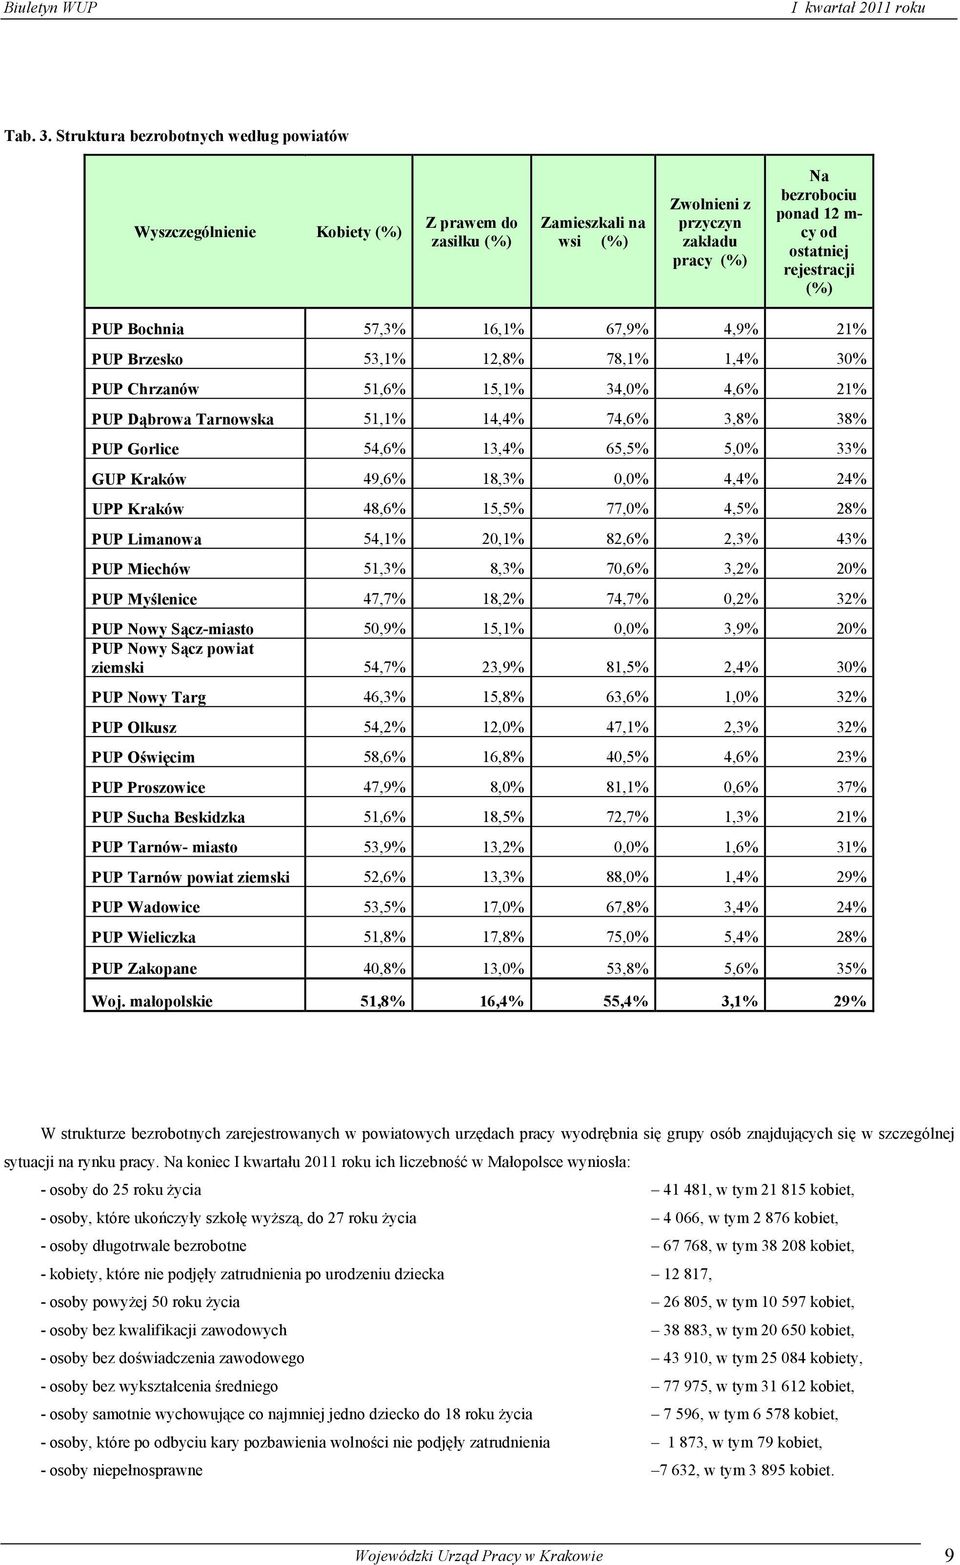 rejestracji (%) PUP Bochnia 57,3% 16,1% 67,9% 4,9% 21% PUP Brzesko 53,1% 12,8% 78,1% 1,4% 30% PUP Chrzanów 51,6% 15,1% 34,0% 4,6% 21% PUP Dąbrowa Tarnowska 51,1% 14,4% 74,6% 3,8% 38% PUP Gorlice